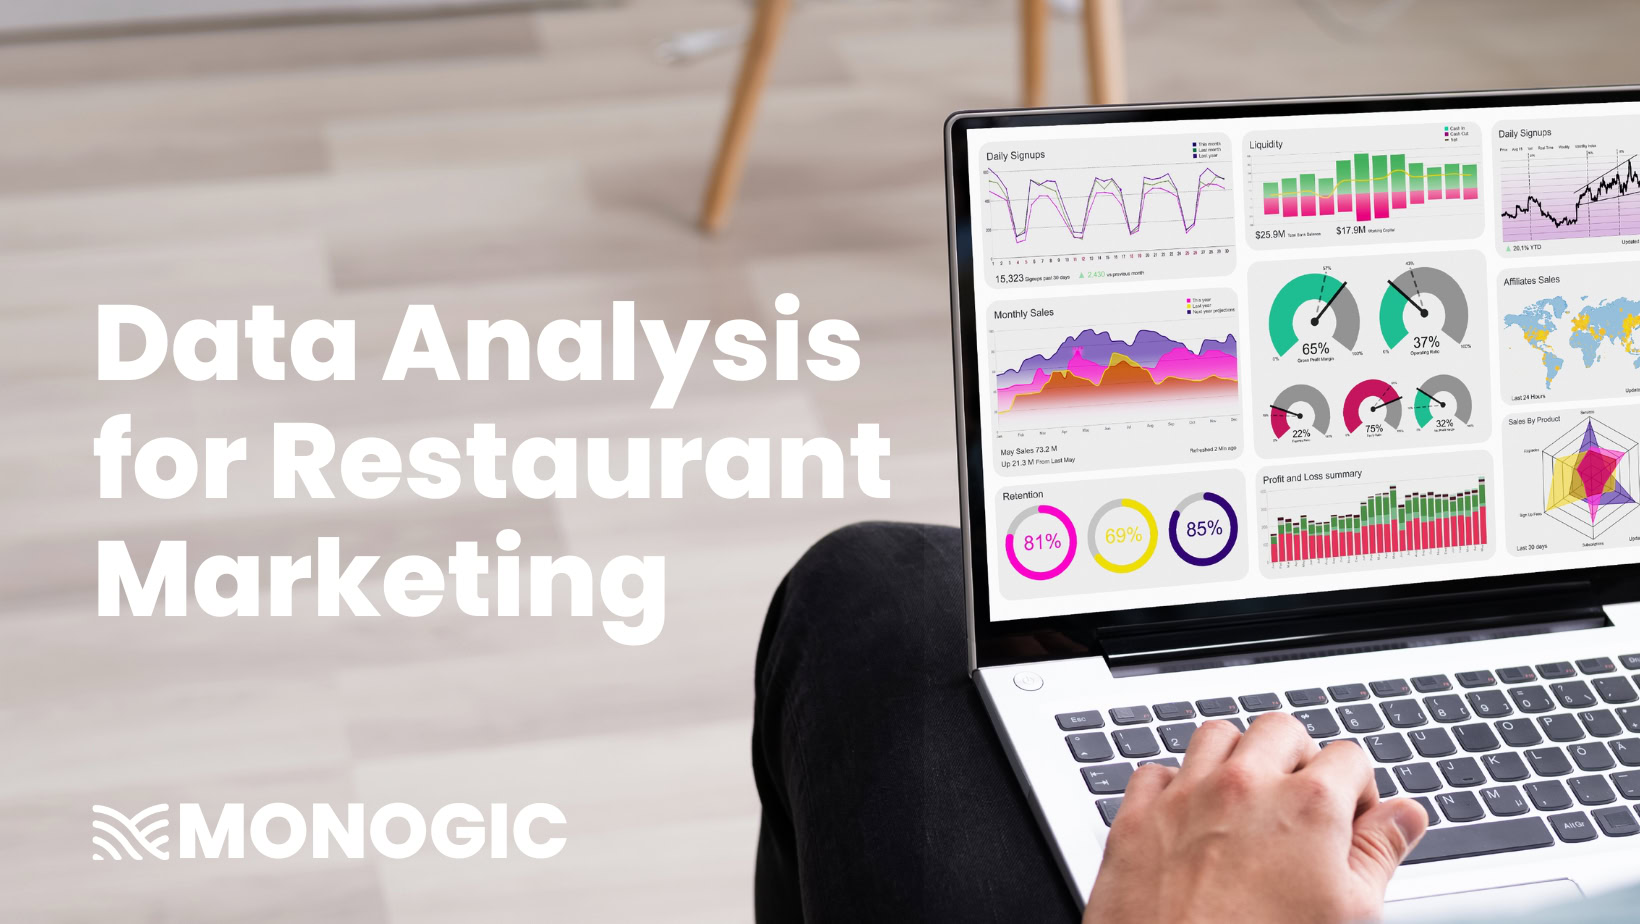 Data Analysis for Restaurant Marketing by Monogic